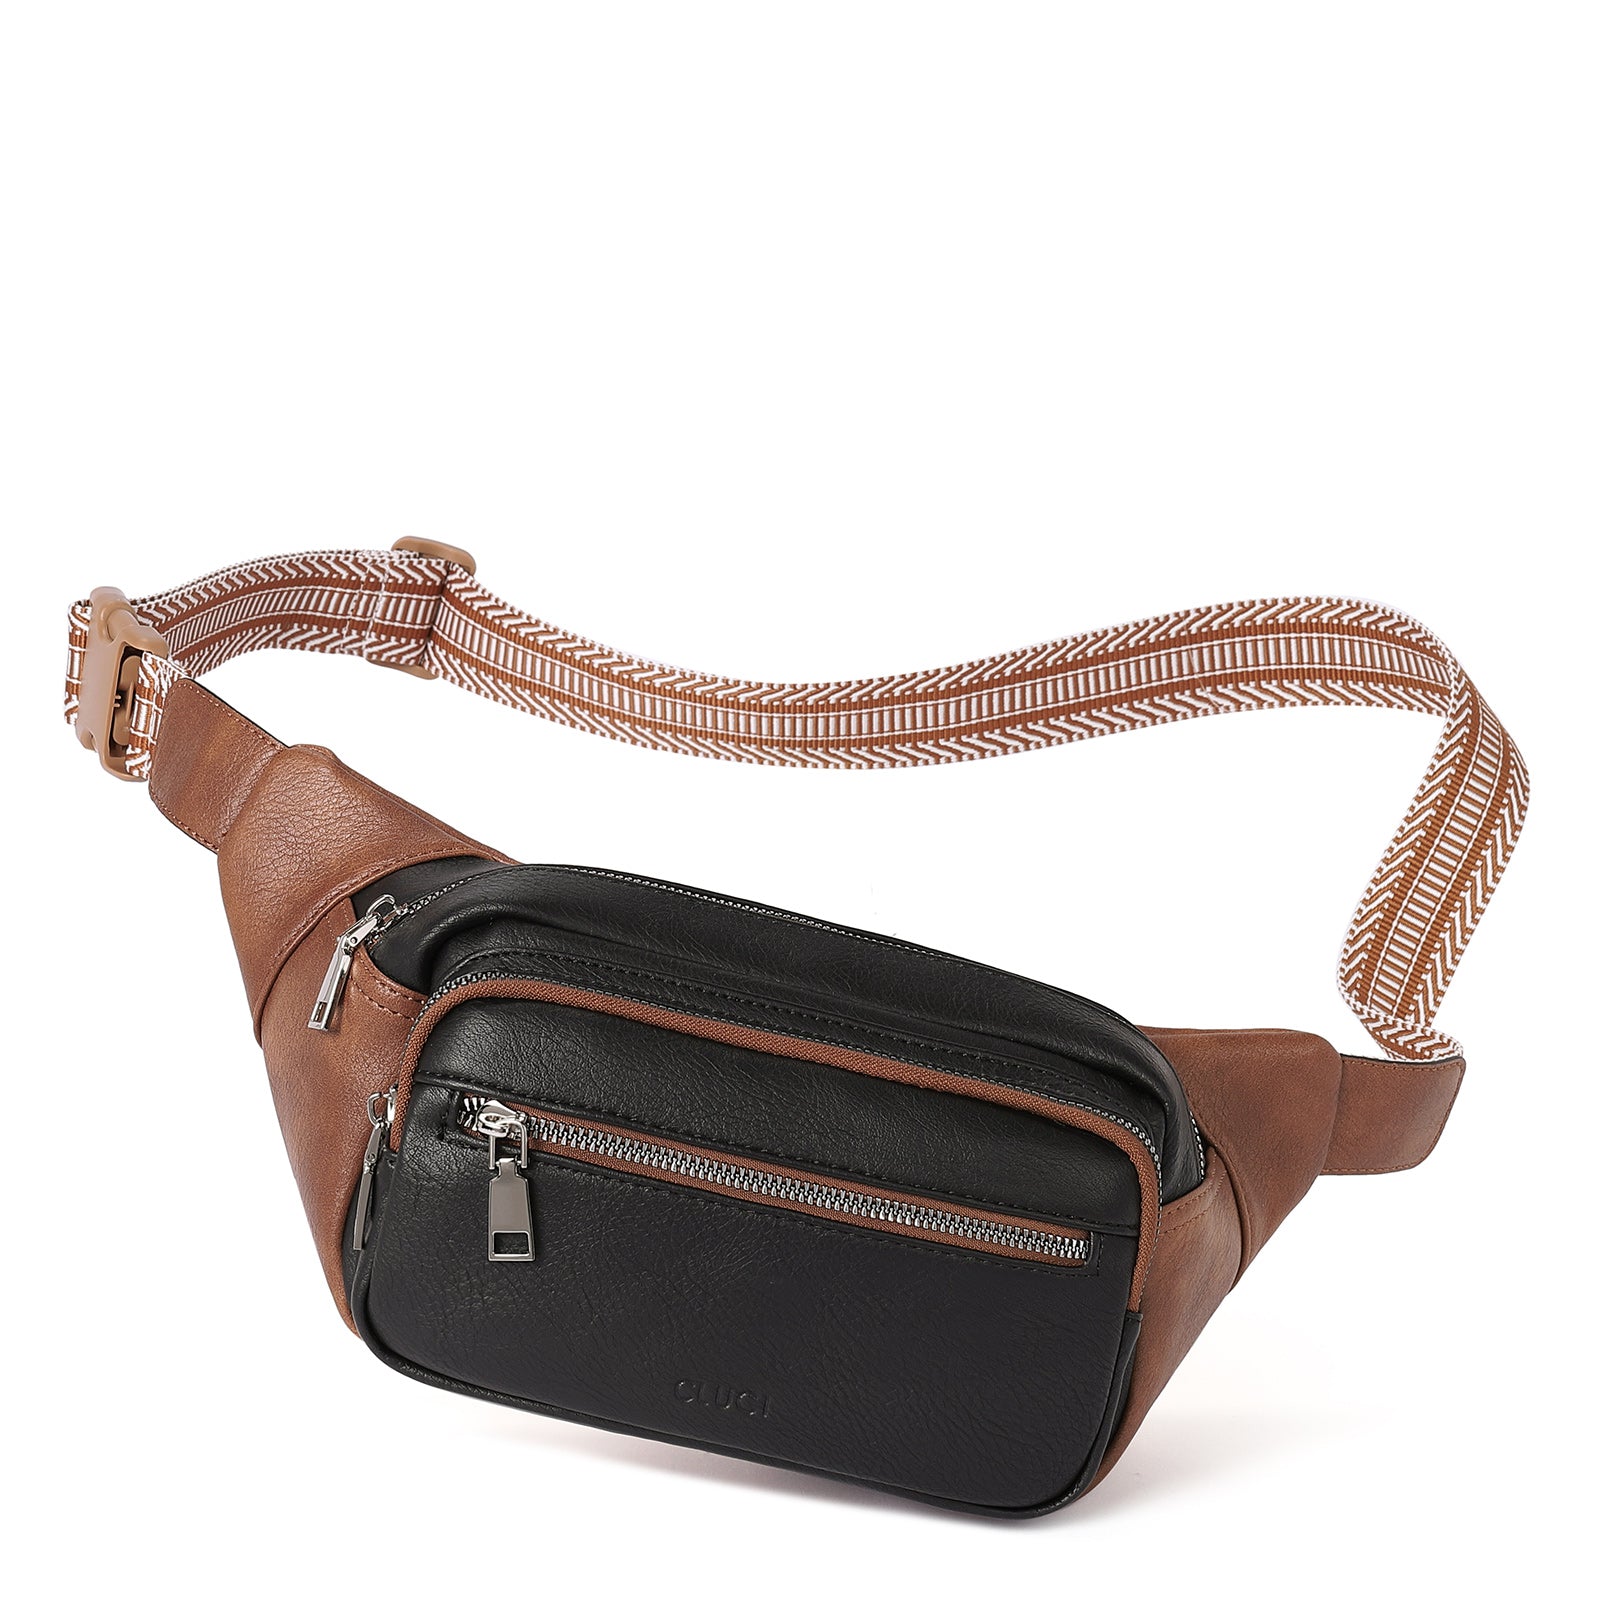 CLUCI Trendy Fanny Belt Sling Bag Crossbody Purse for Travel, Outdoors